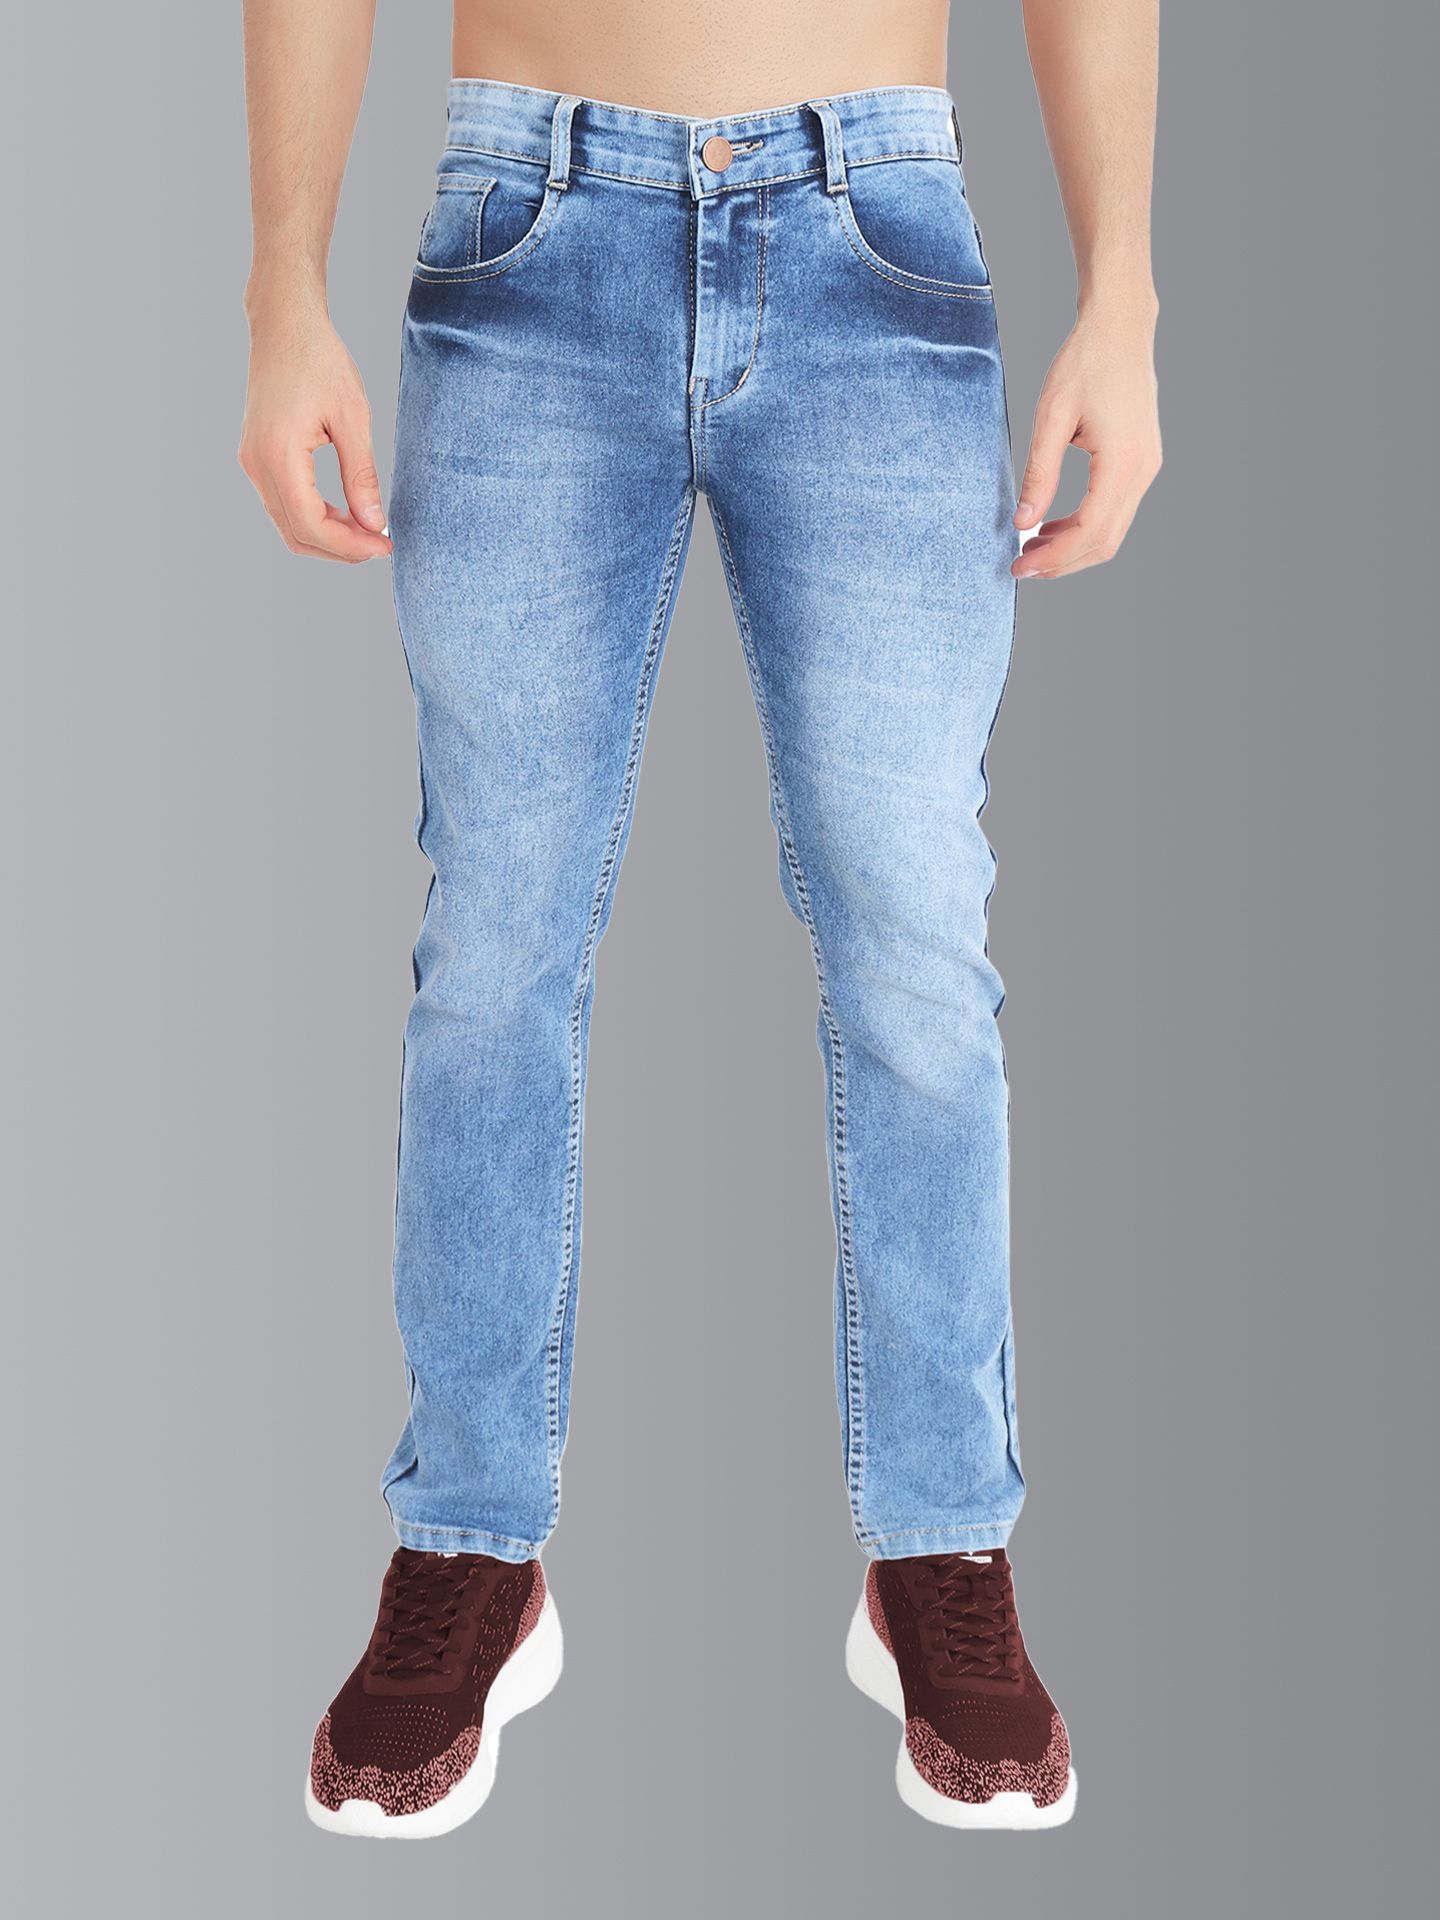 RAGZO - Light Blue Denim Slim Fit Men's Jeans ( Pack of 1 )